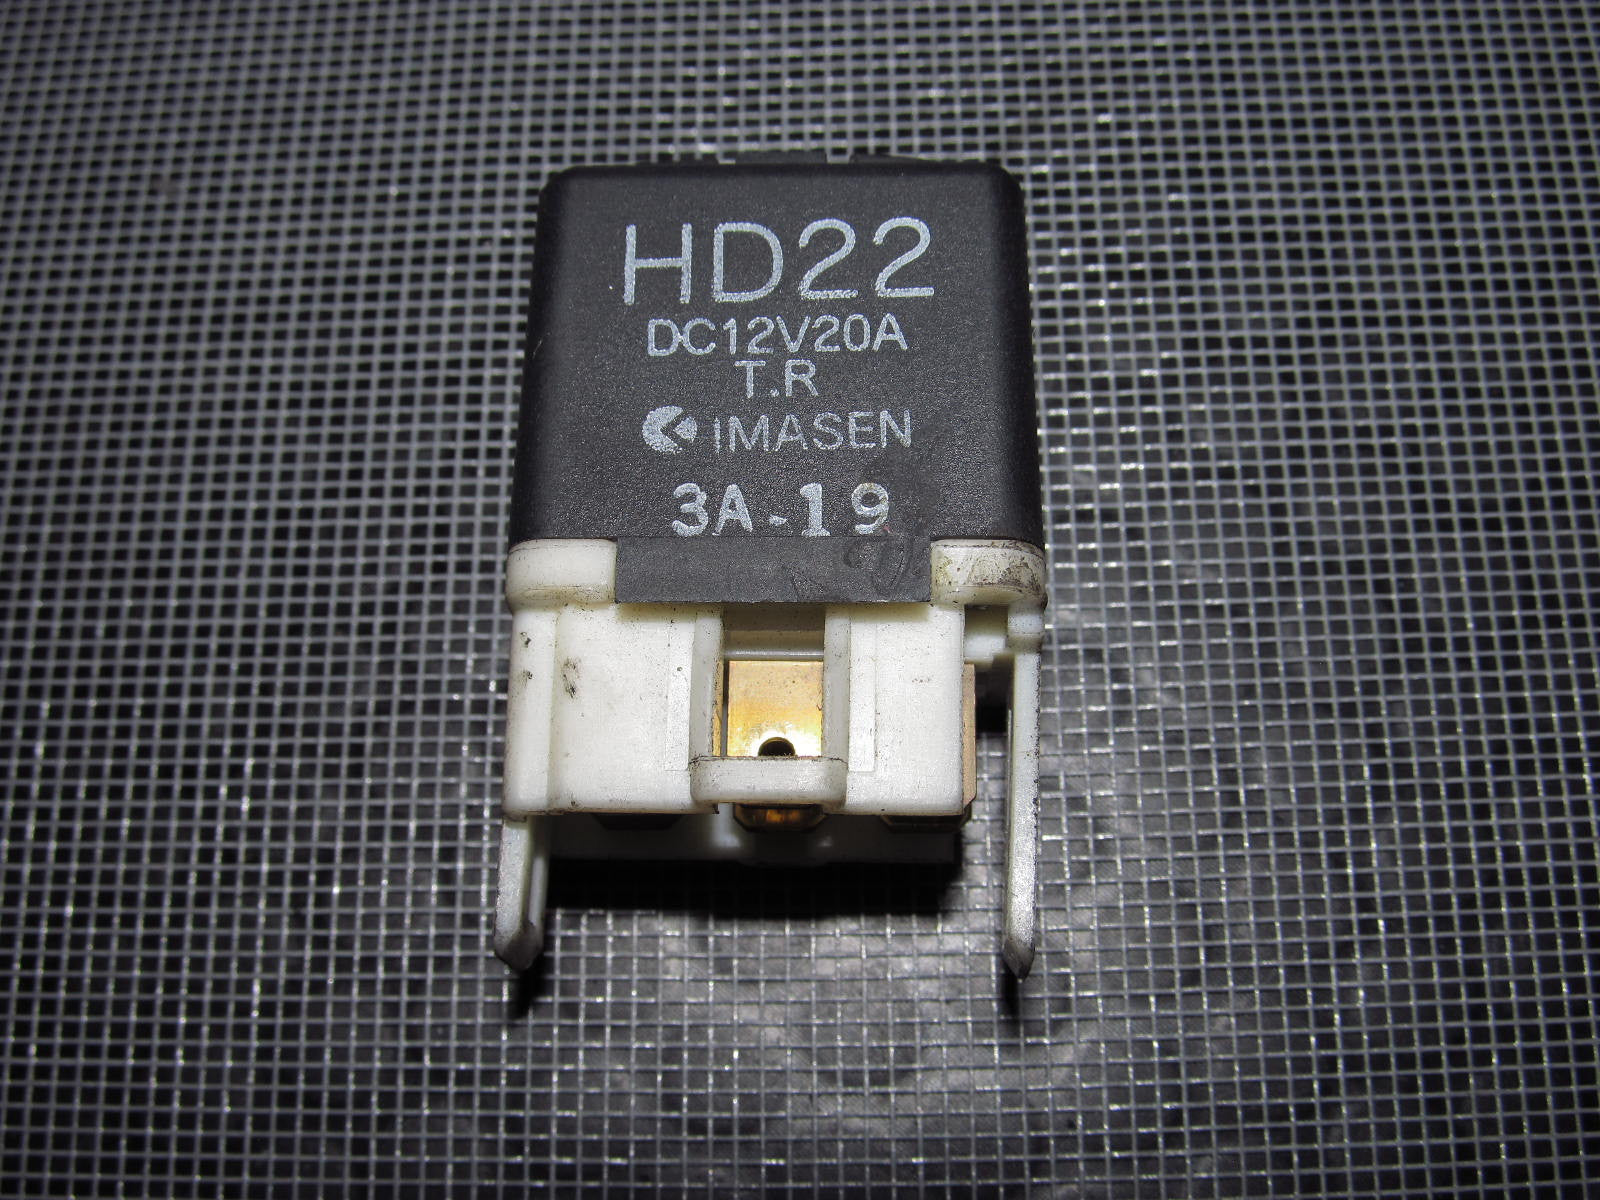 Mazda Relay HD22 DC12V20A 3A-19